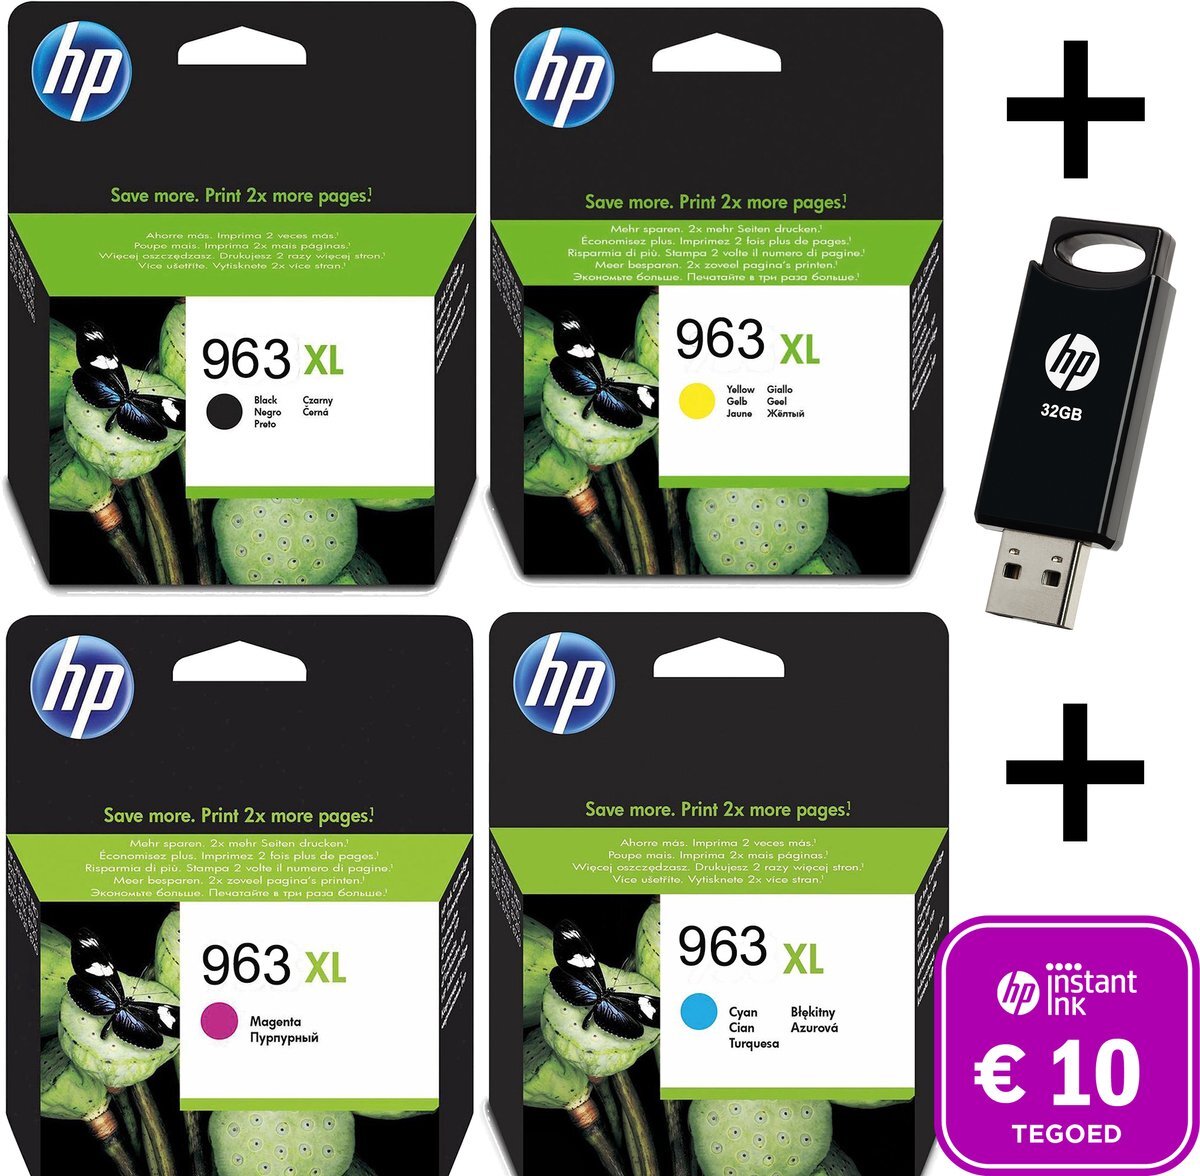 HP 963 XL Multi Bundel - Met Gratis 32 GB USB Stick & Instant Ink tegoed